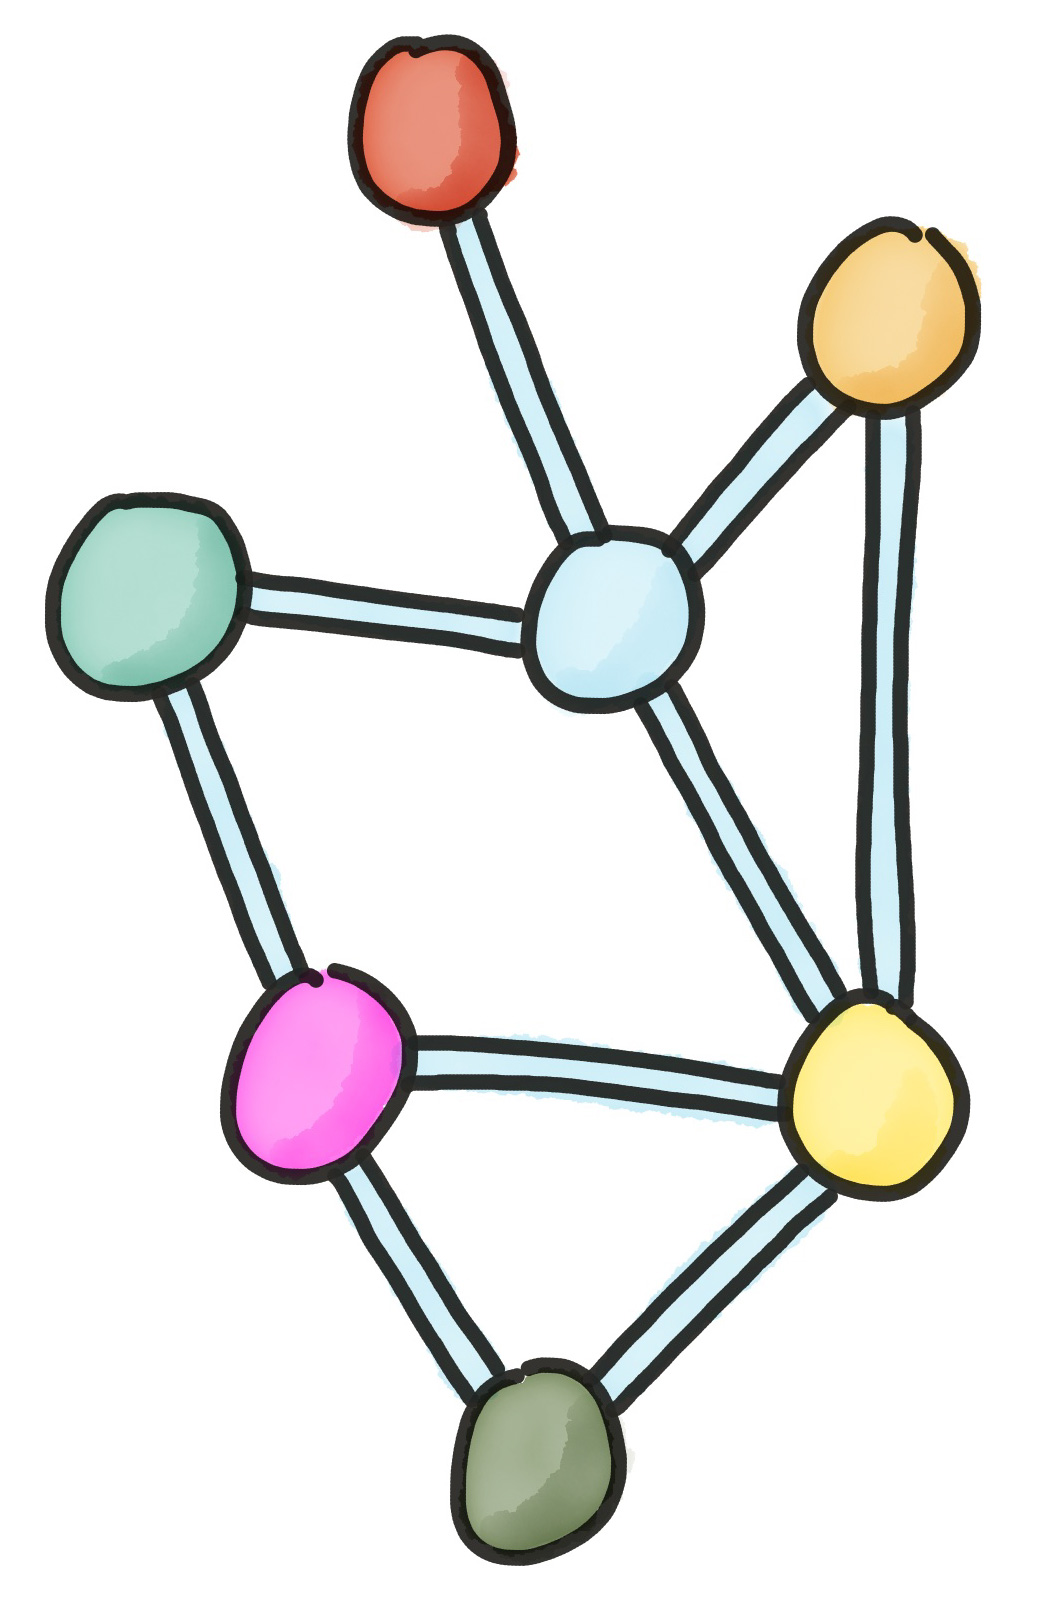 Illustration Netzwerk, verknüpfte bunte Punkte